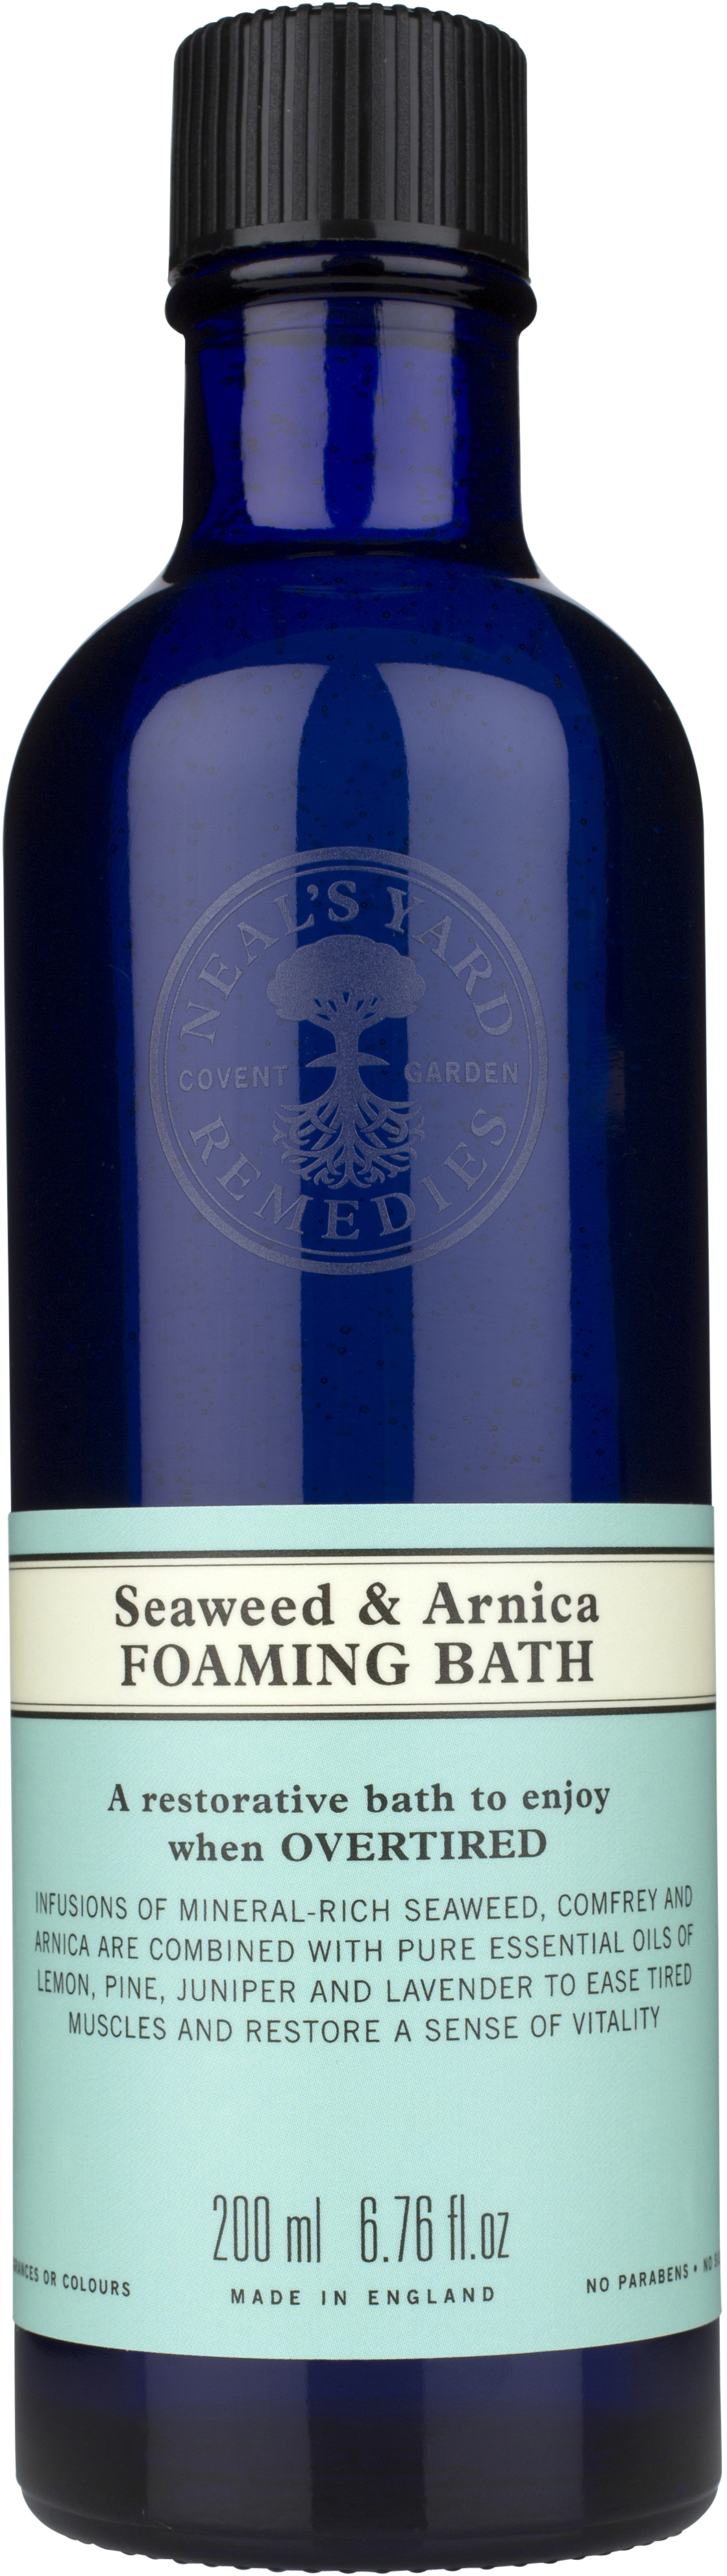 Neal’s Yard Remedies Seaweed & Arnica Foaming Bath 200ml